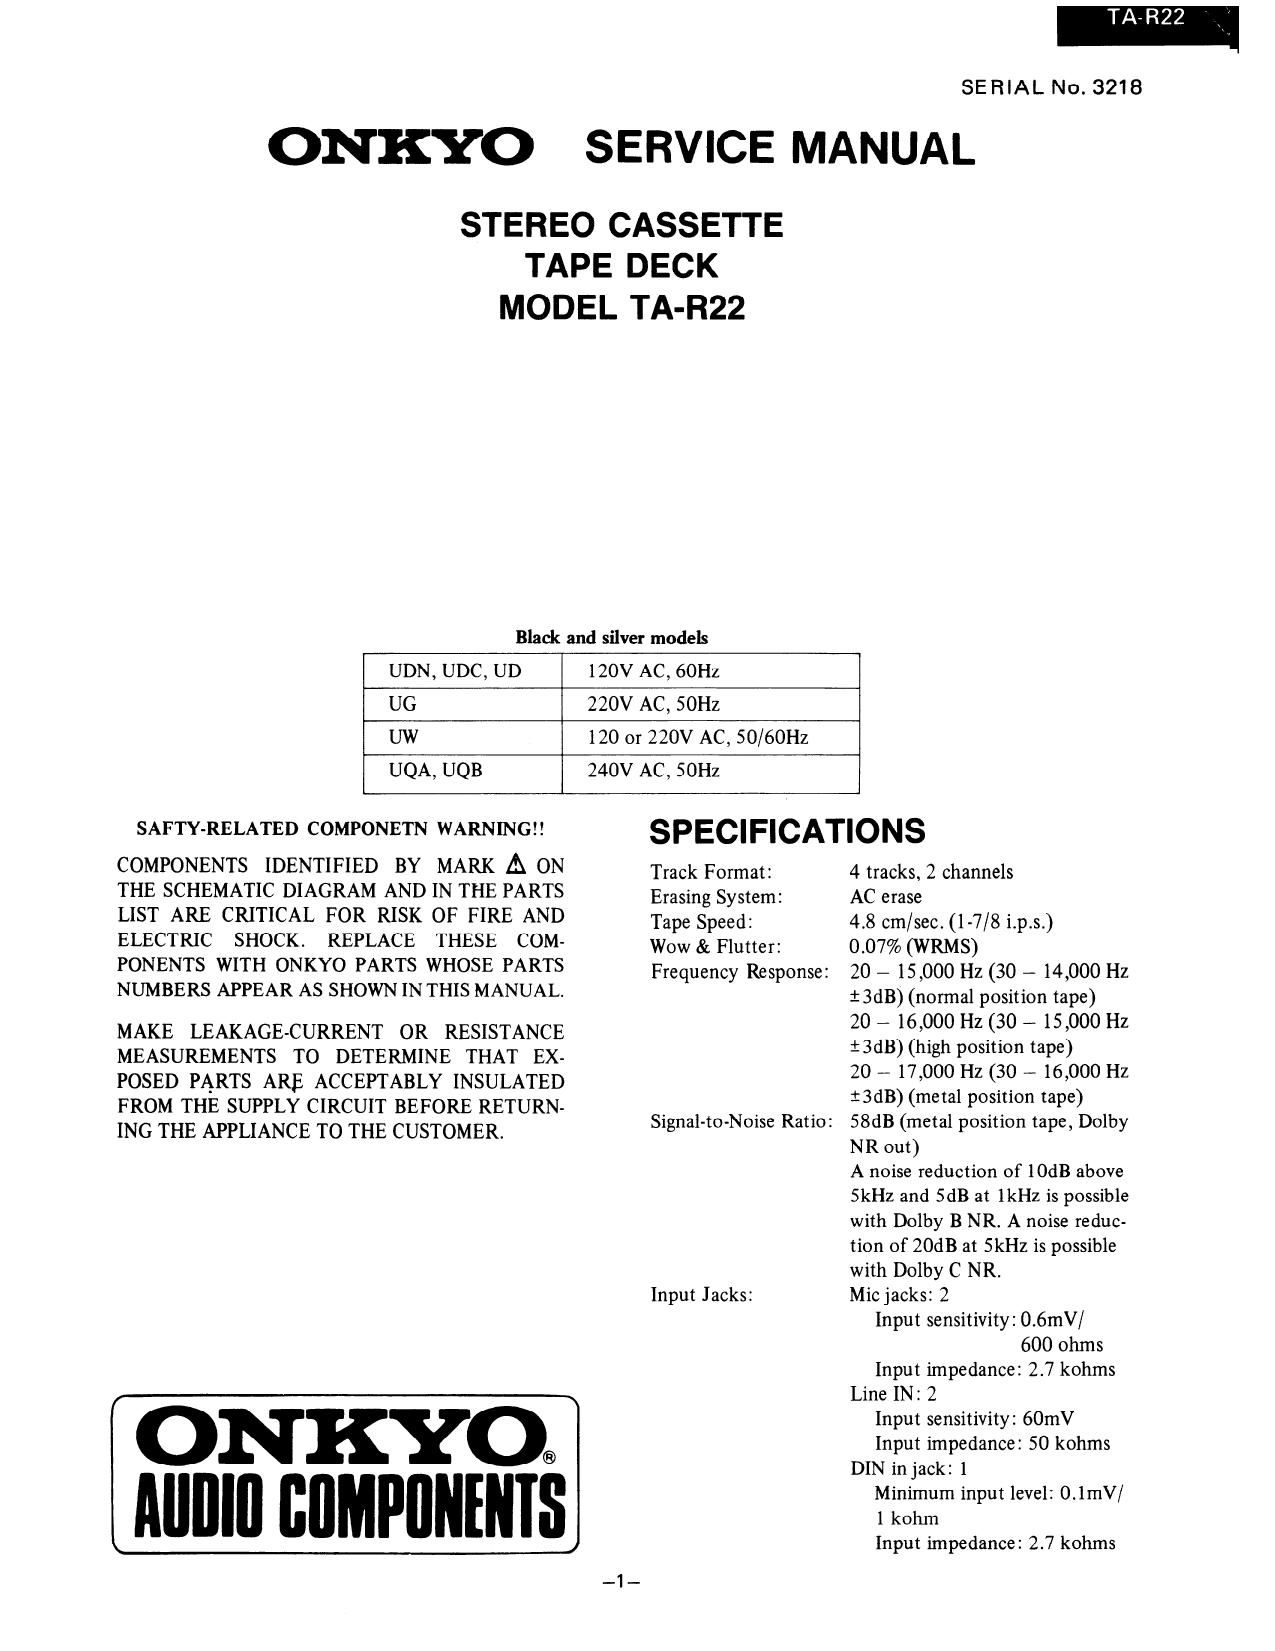 Onkyo TAR 22 Service Manual